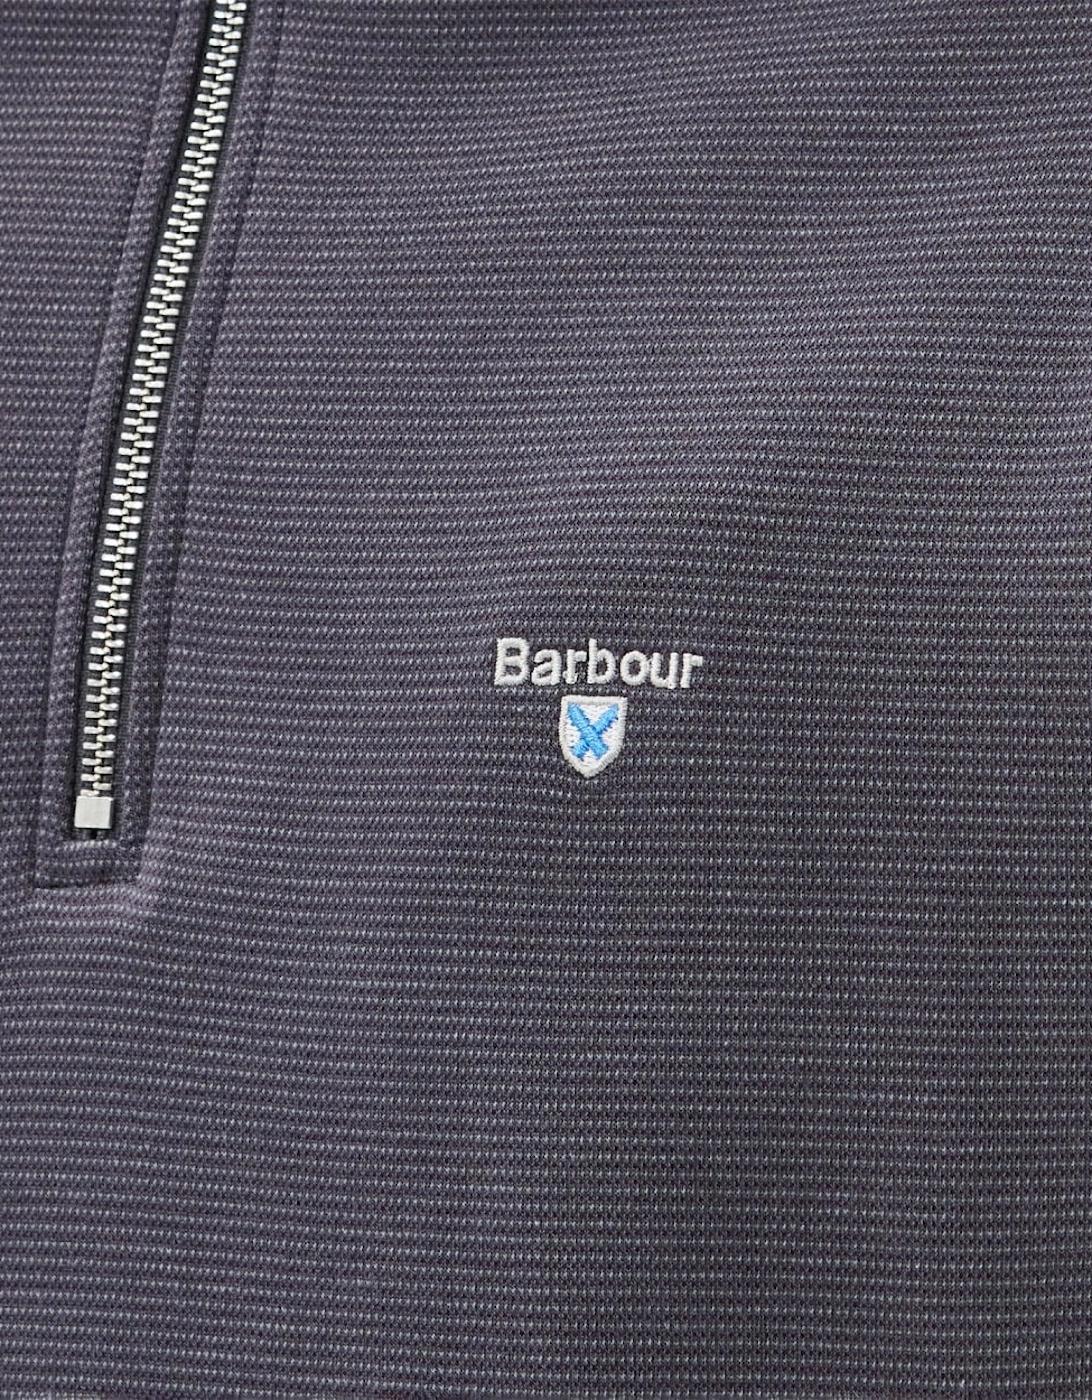 Bradbury Mens Half-Zip Sweatshirt